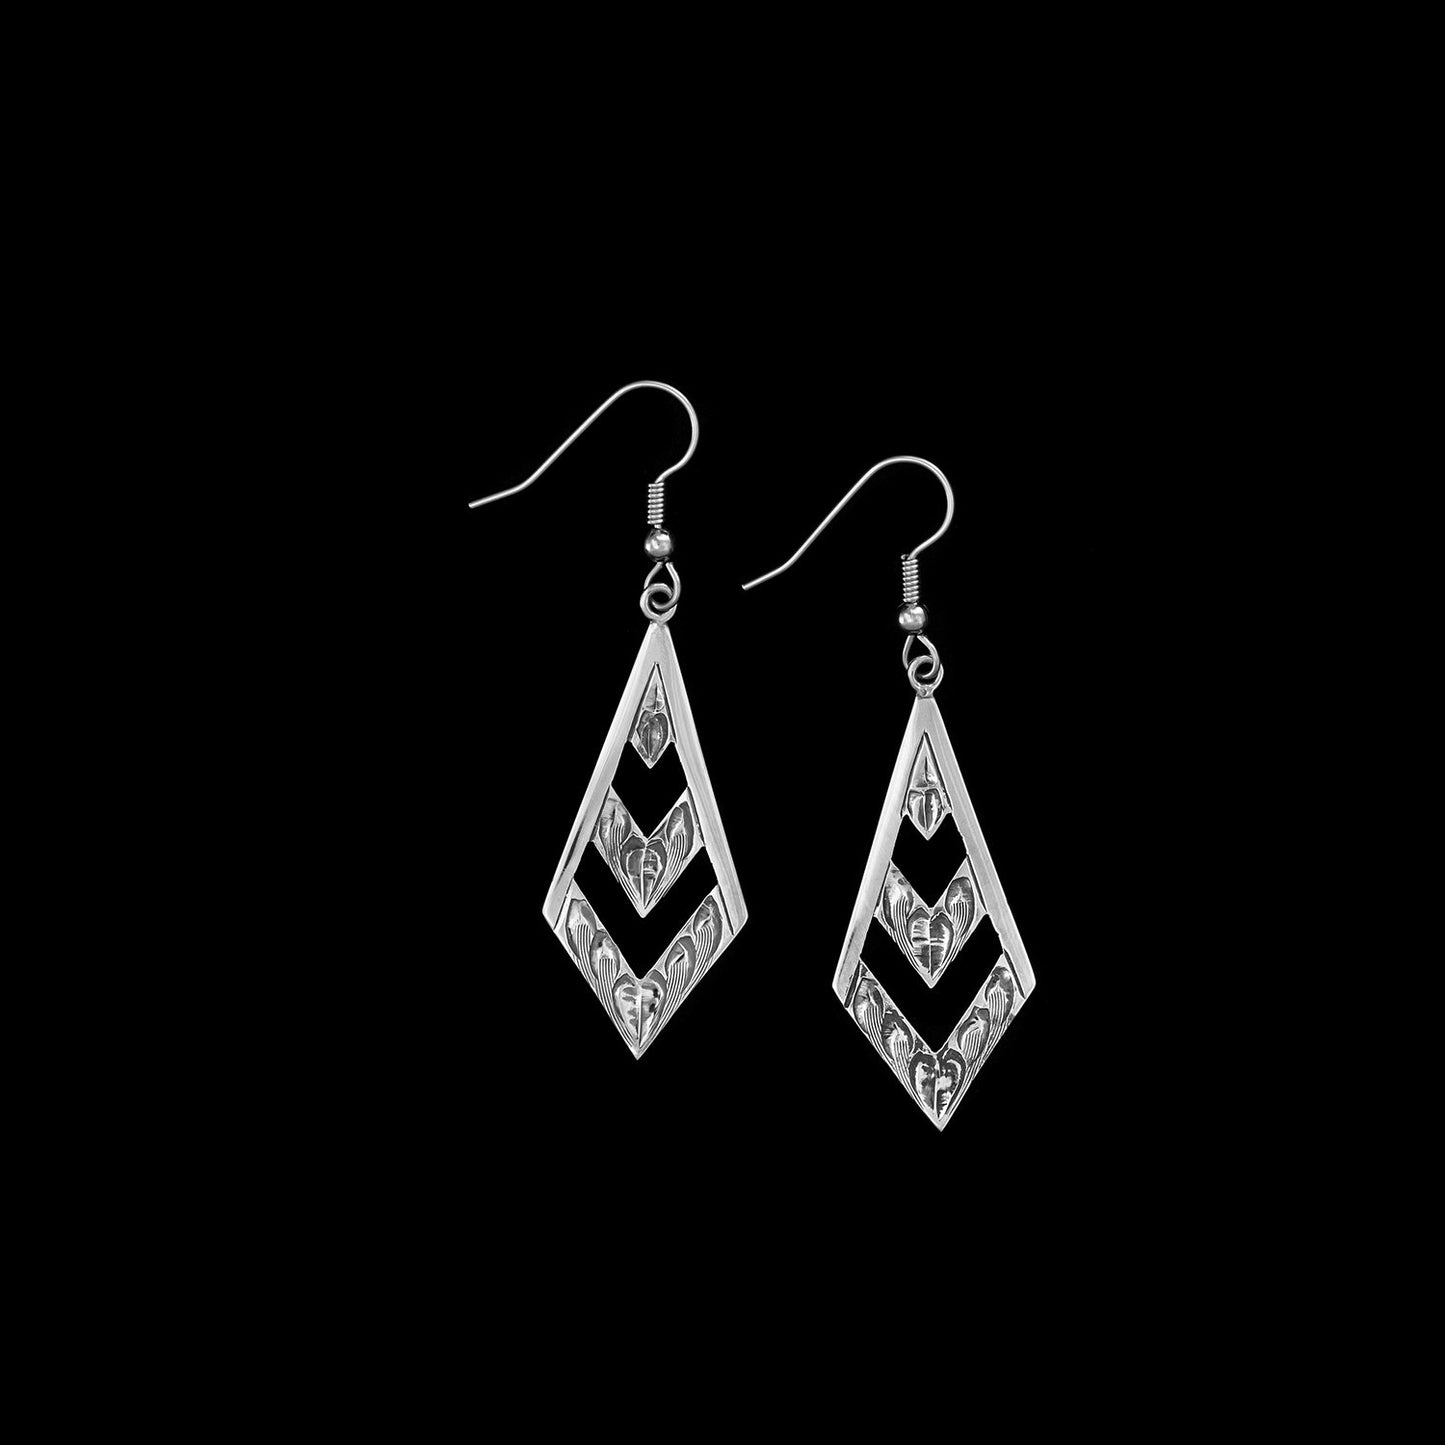 VOGT 011-083 The Navajo Brave Earrings